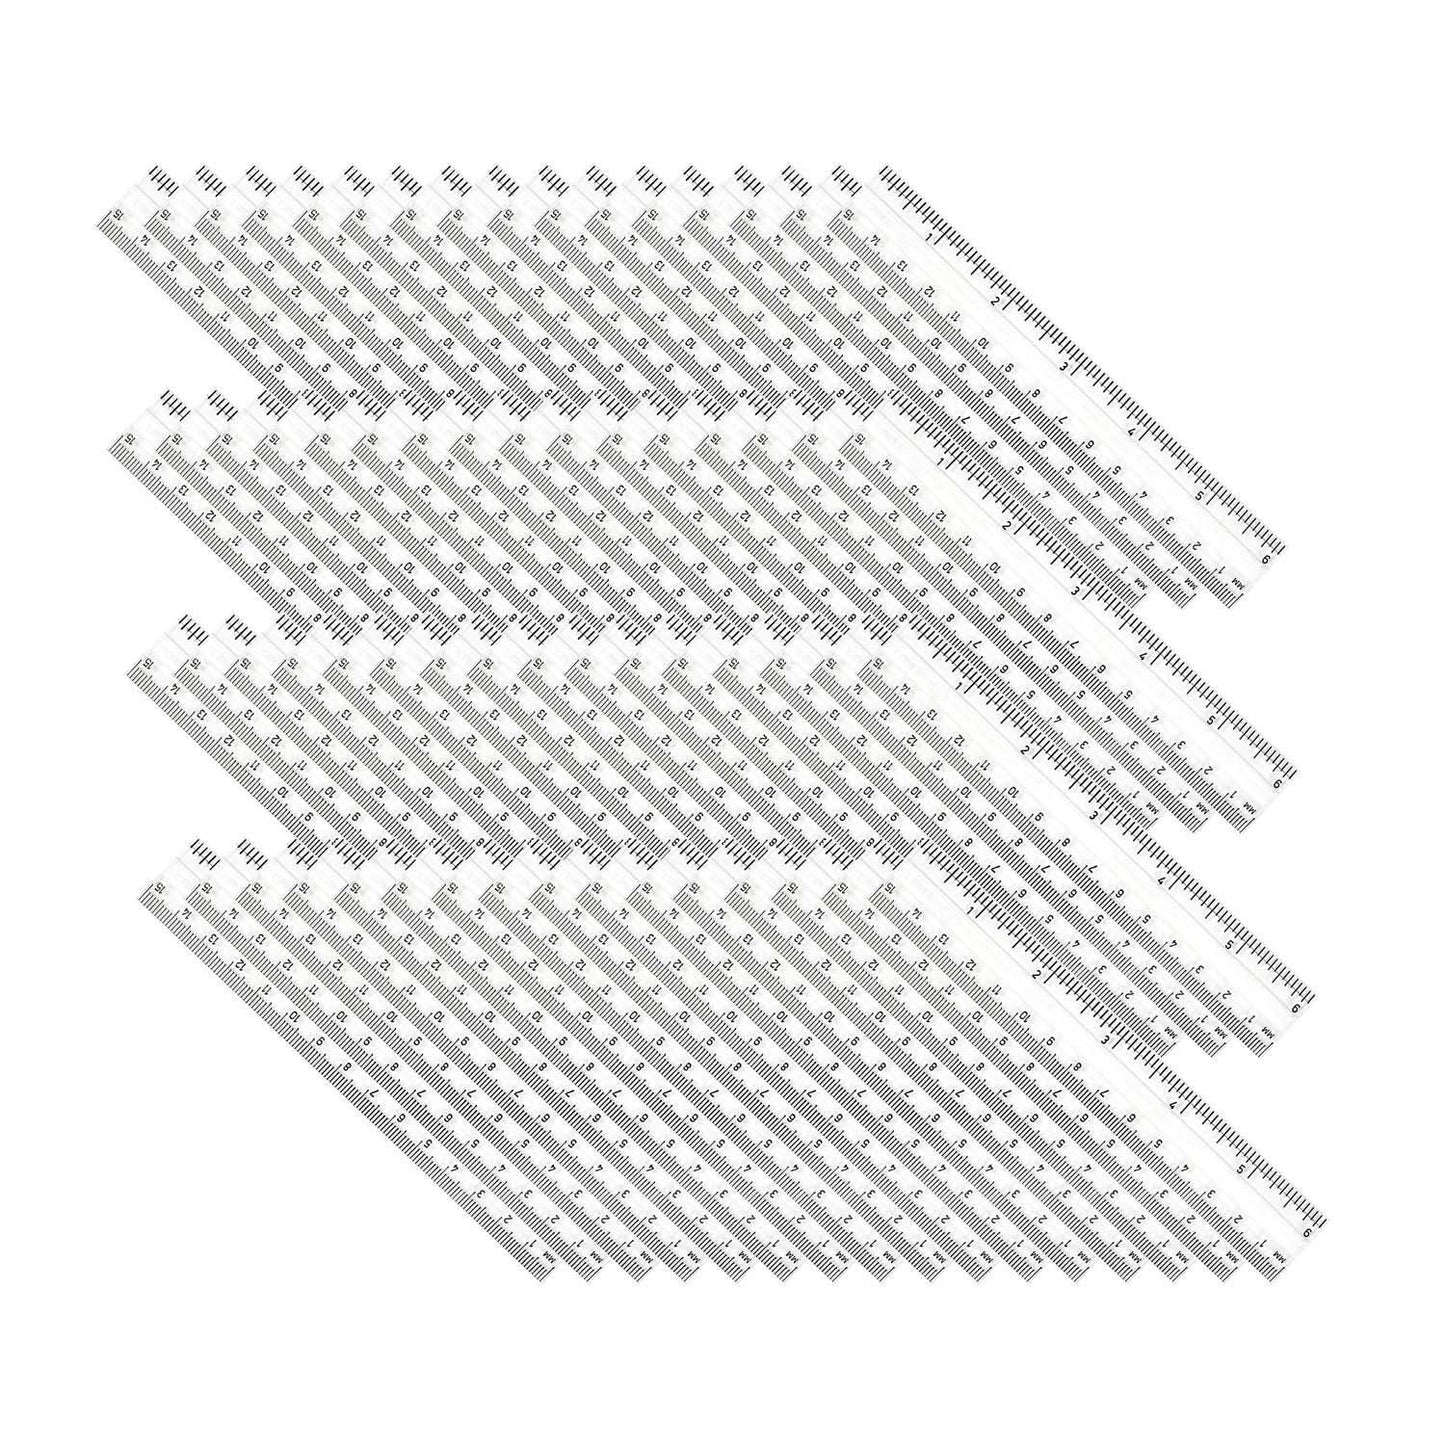 Plastic Ruler, 6", Inches/Metric, Clear, Pack of 48 - Loomini